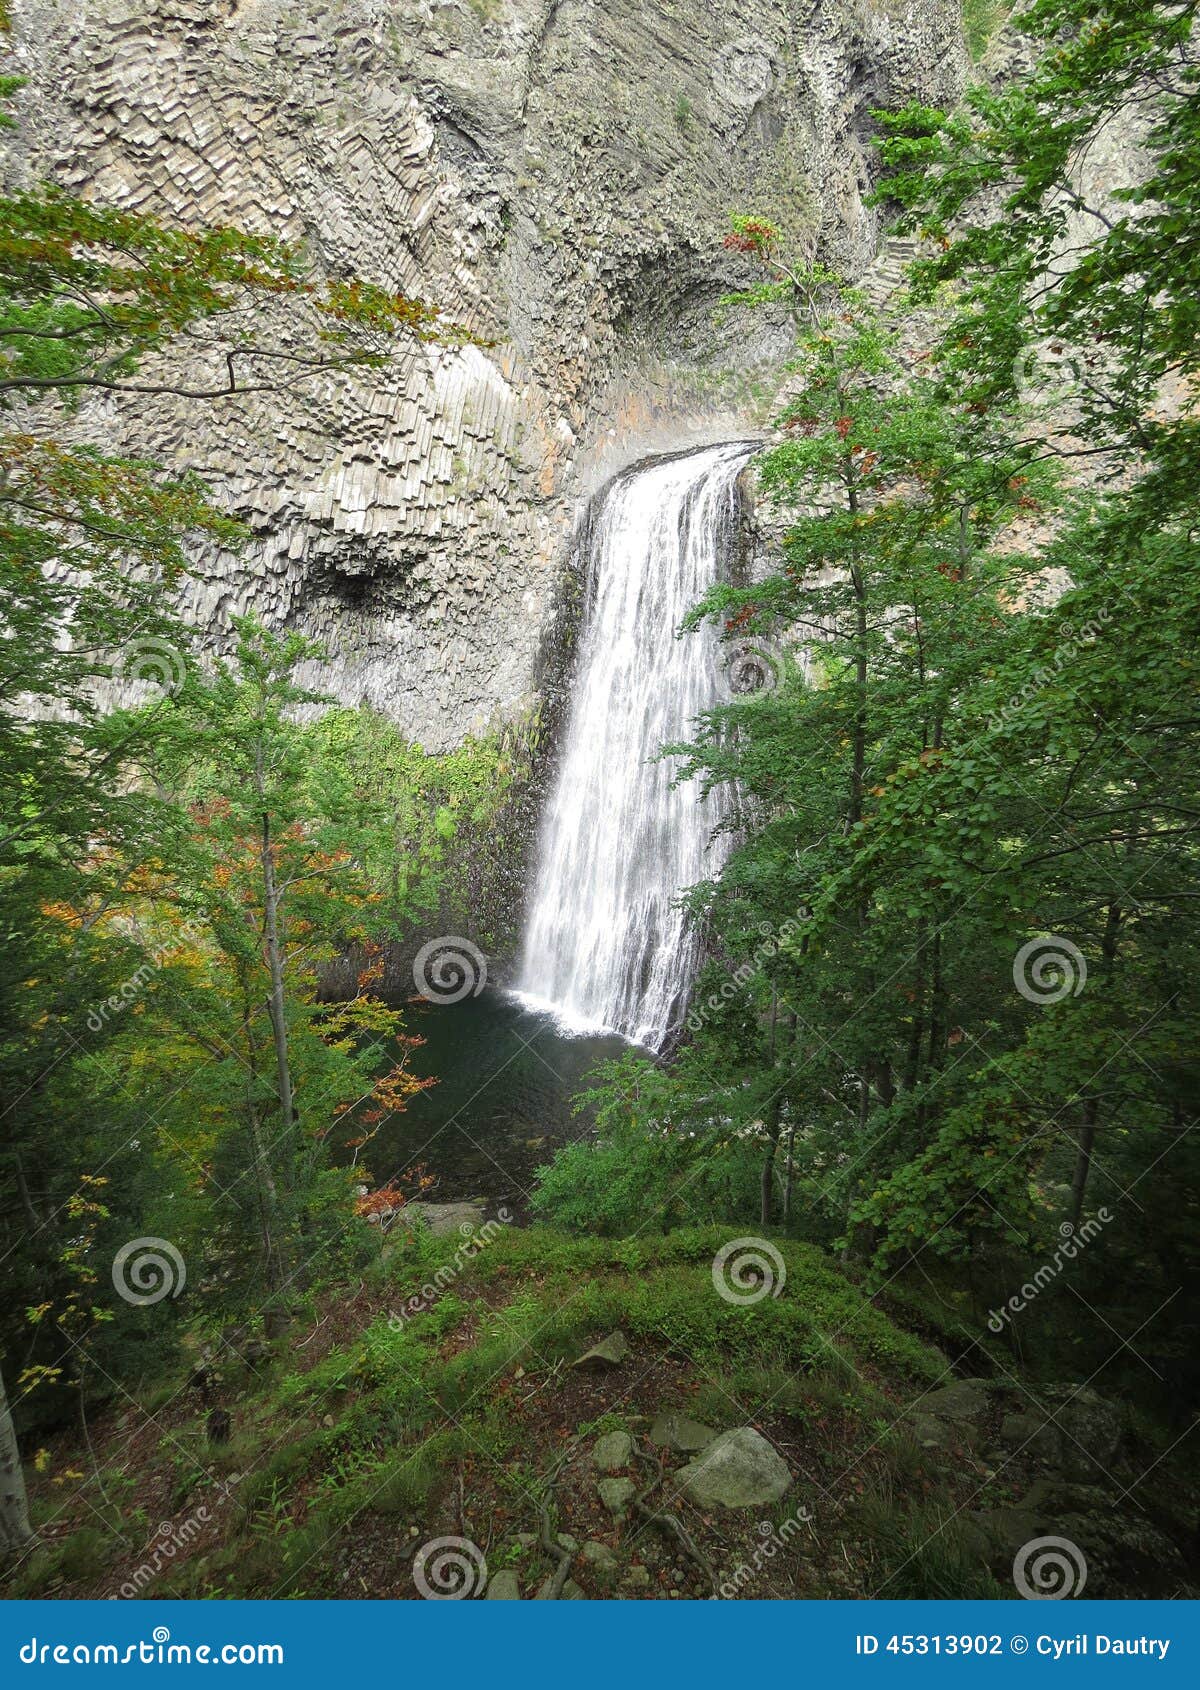 cascade du ray pic (ardeche) - waterfall